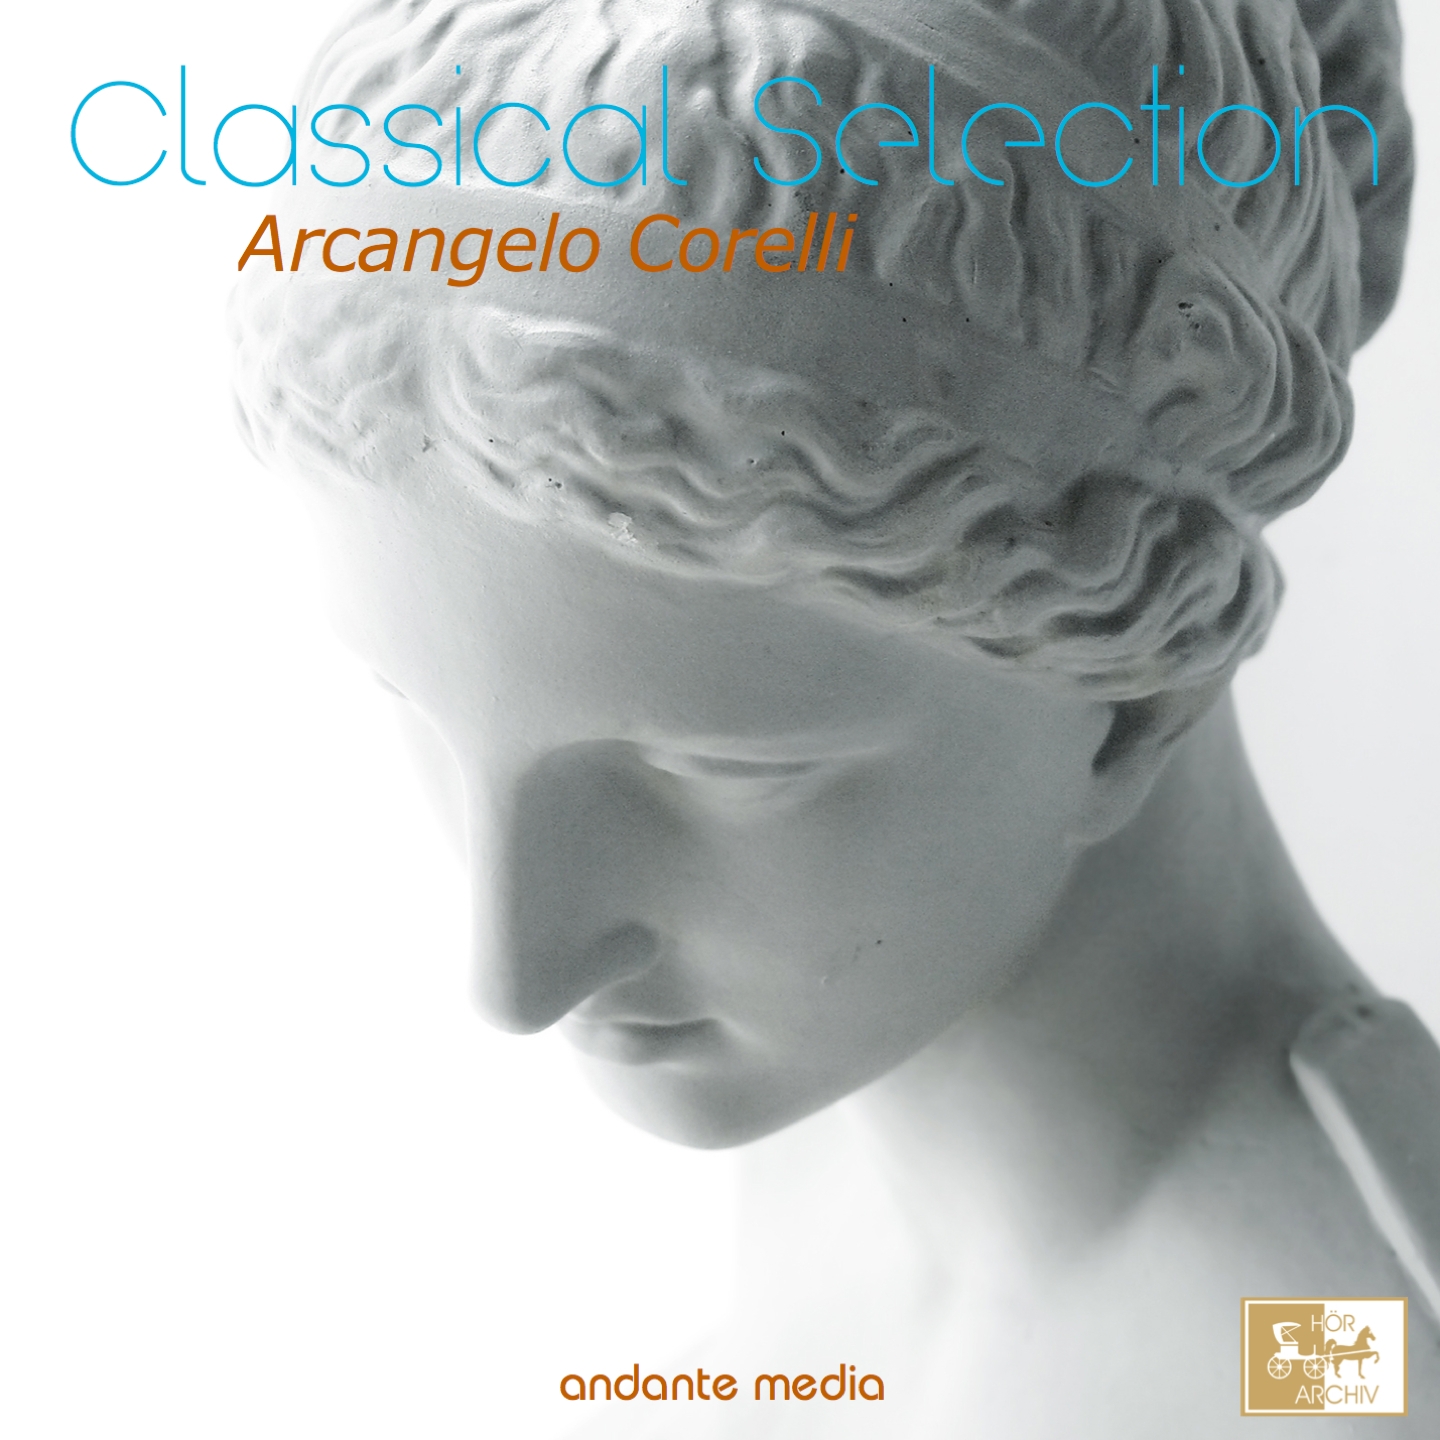 12 Concerti grossi, Op. 6, No. 10 in C Major: I. Preludio. Andante